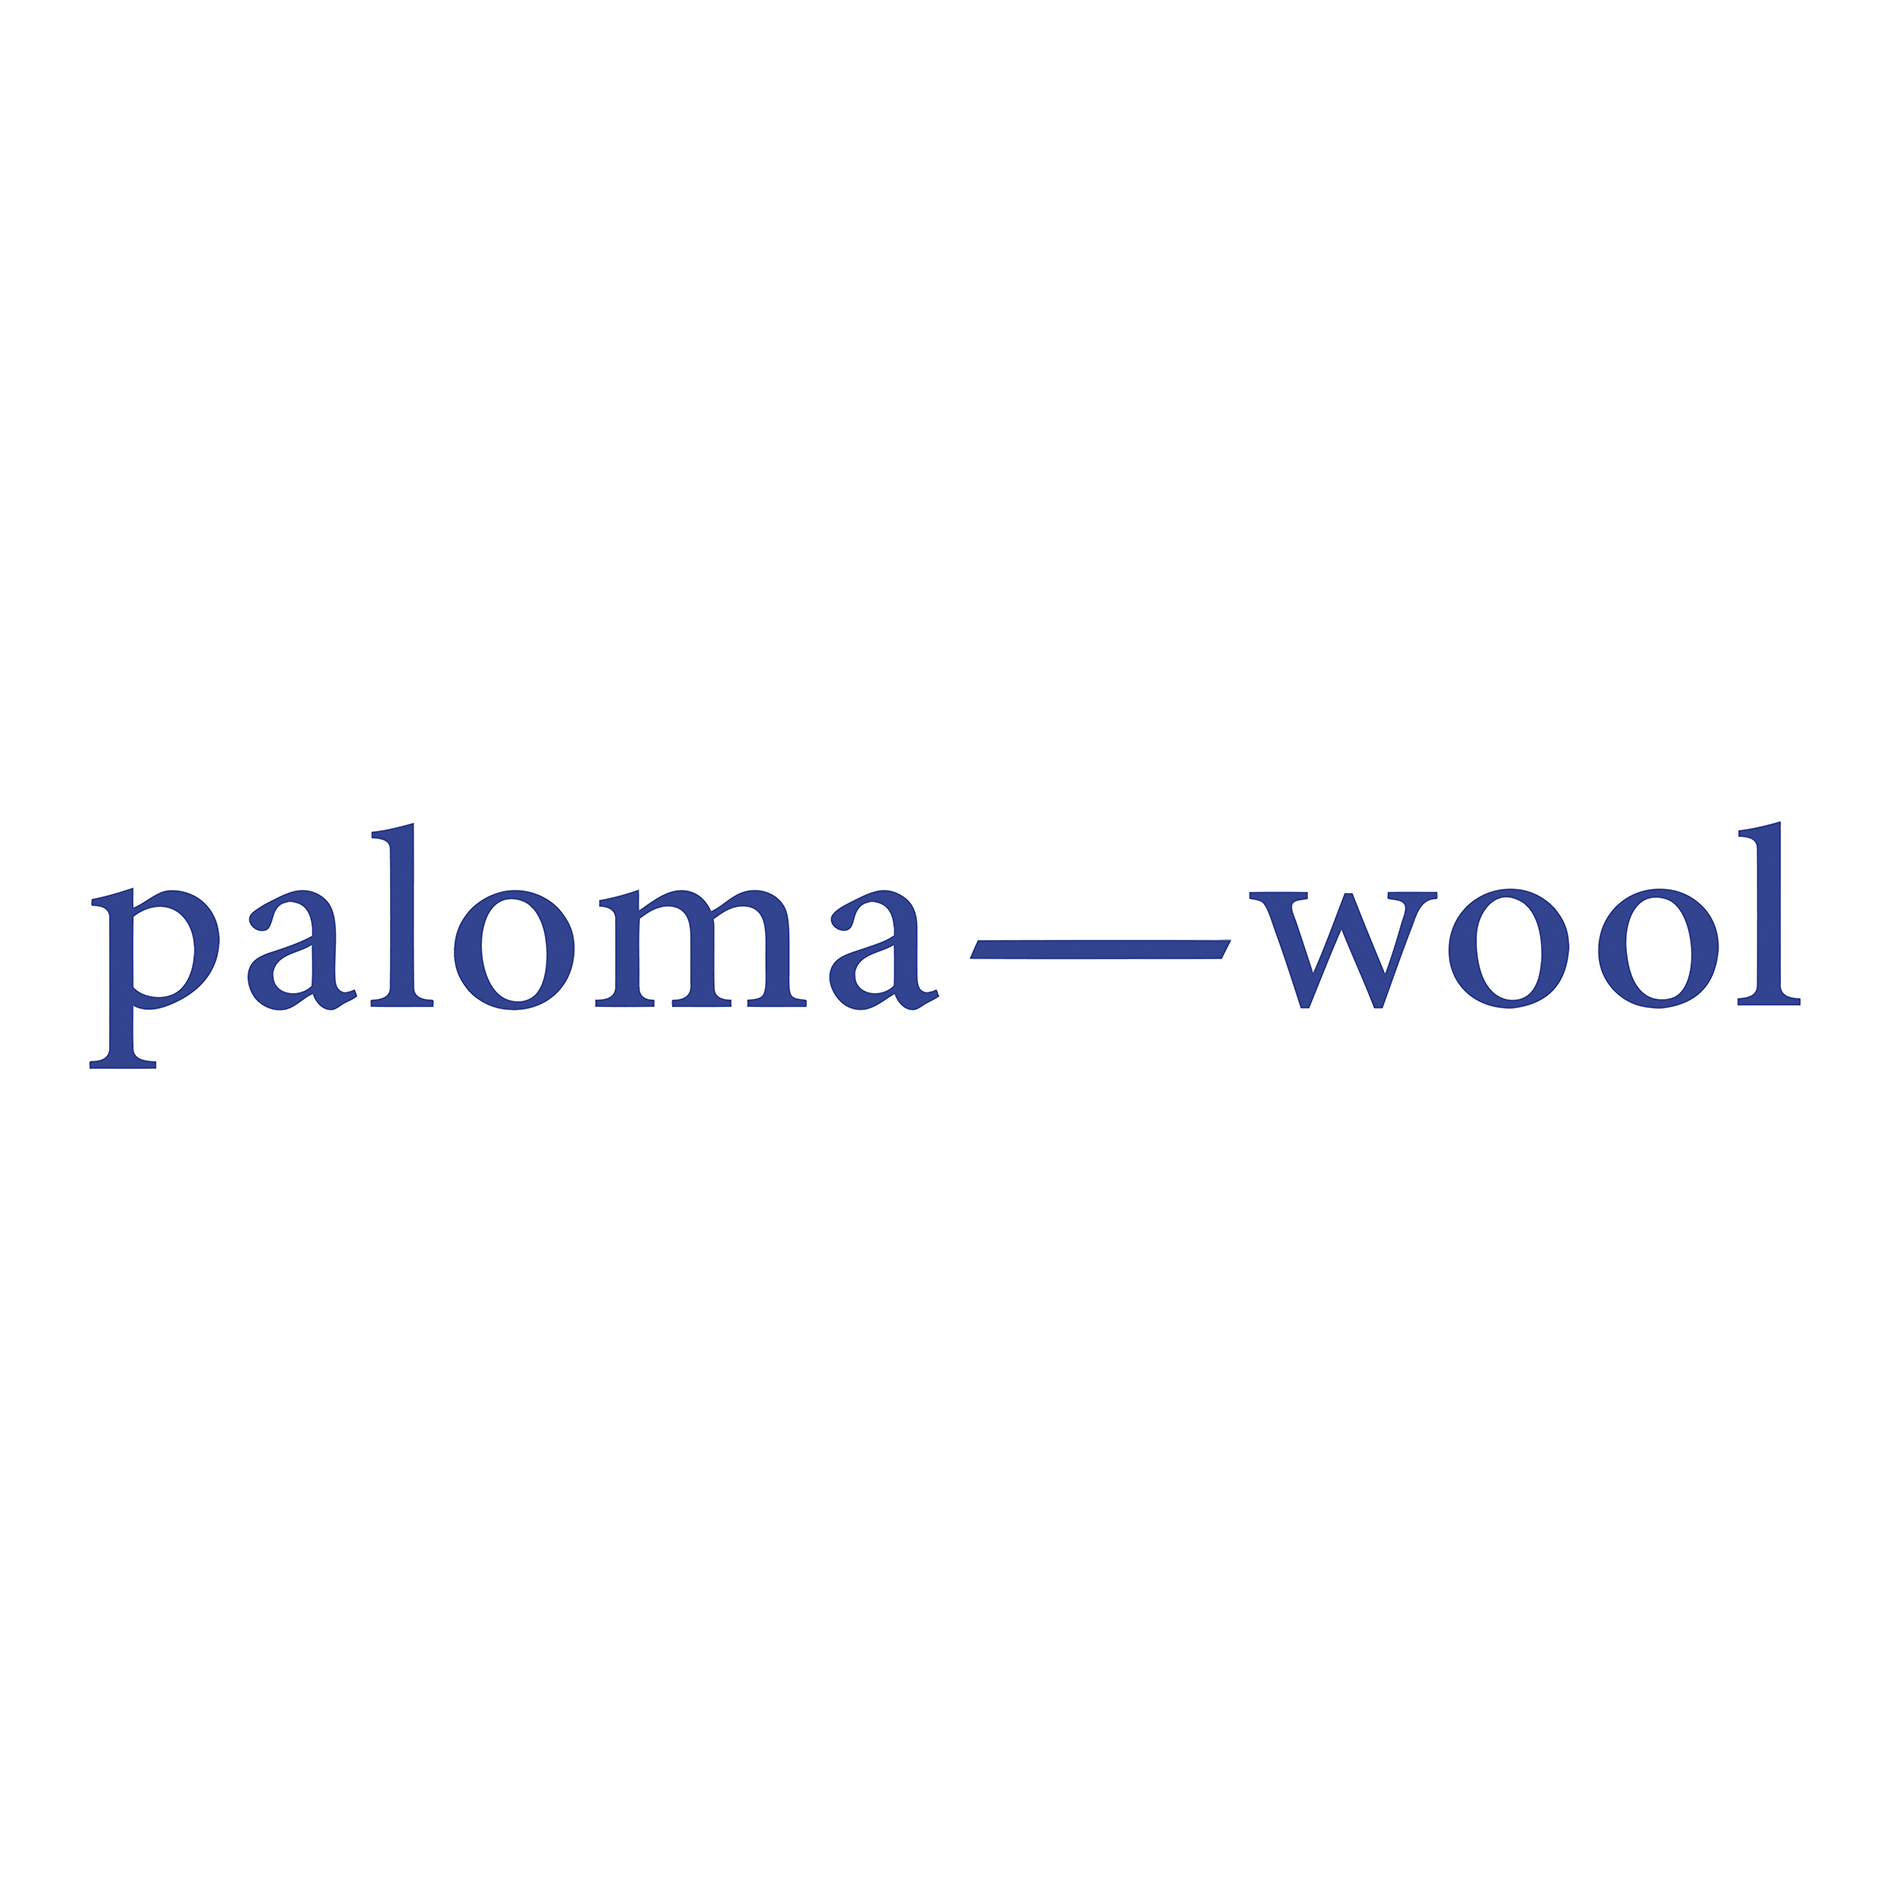 paloma-wool.png